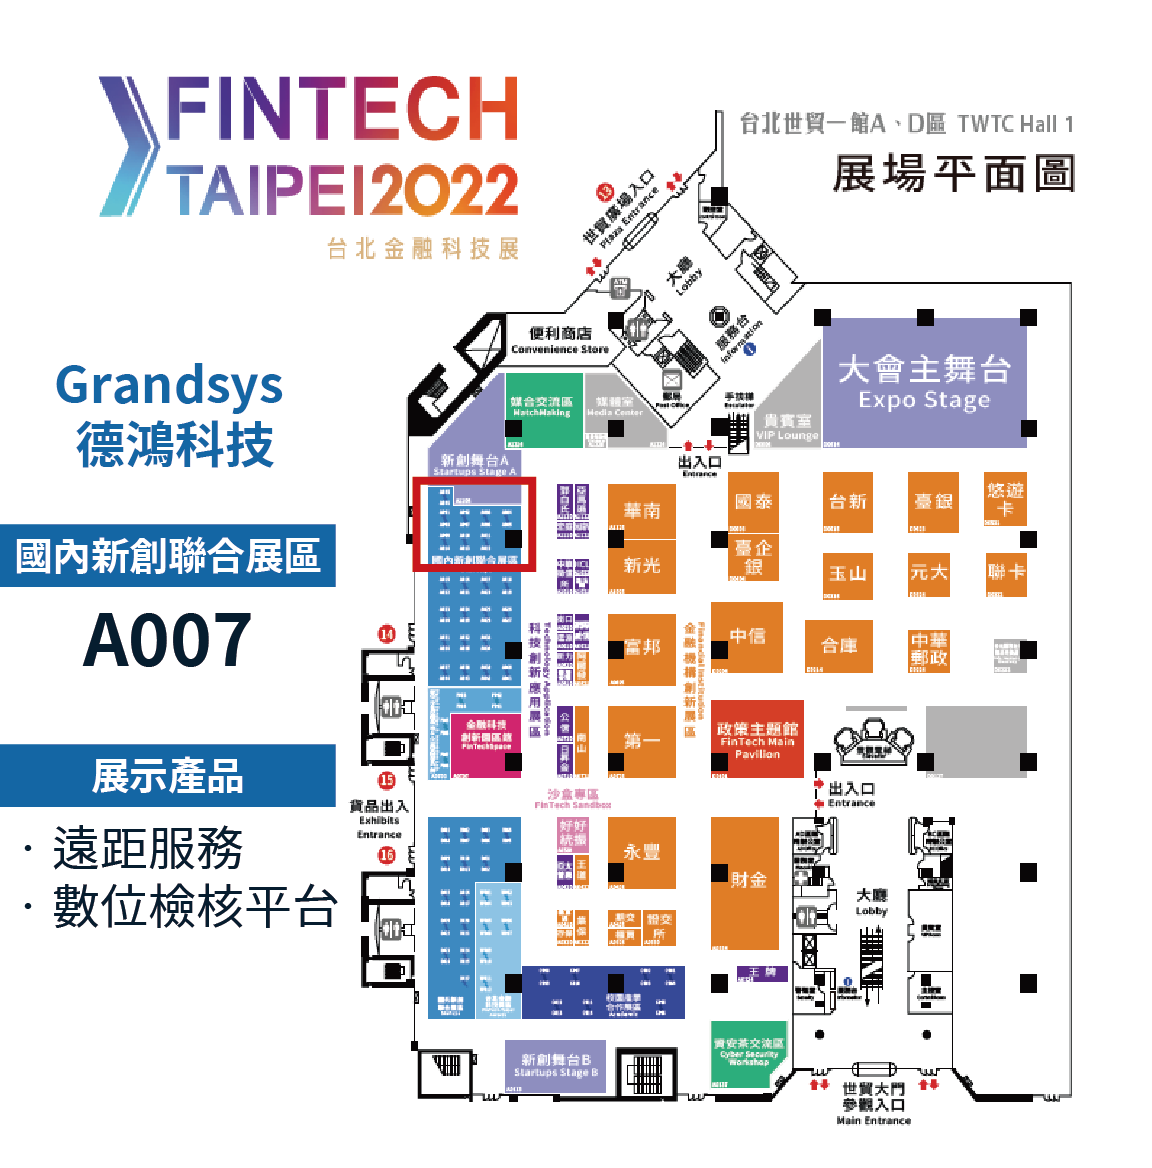 FinTech Taipei 2022 02